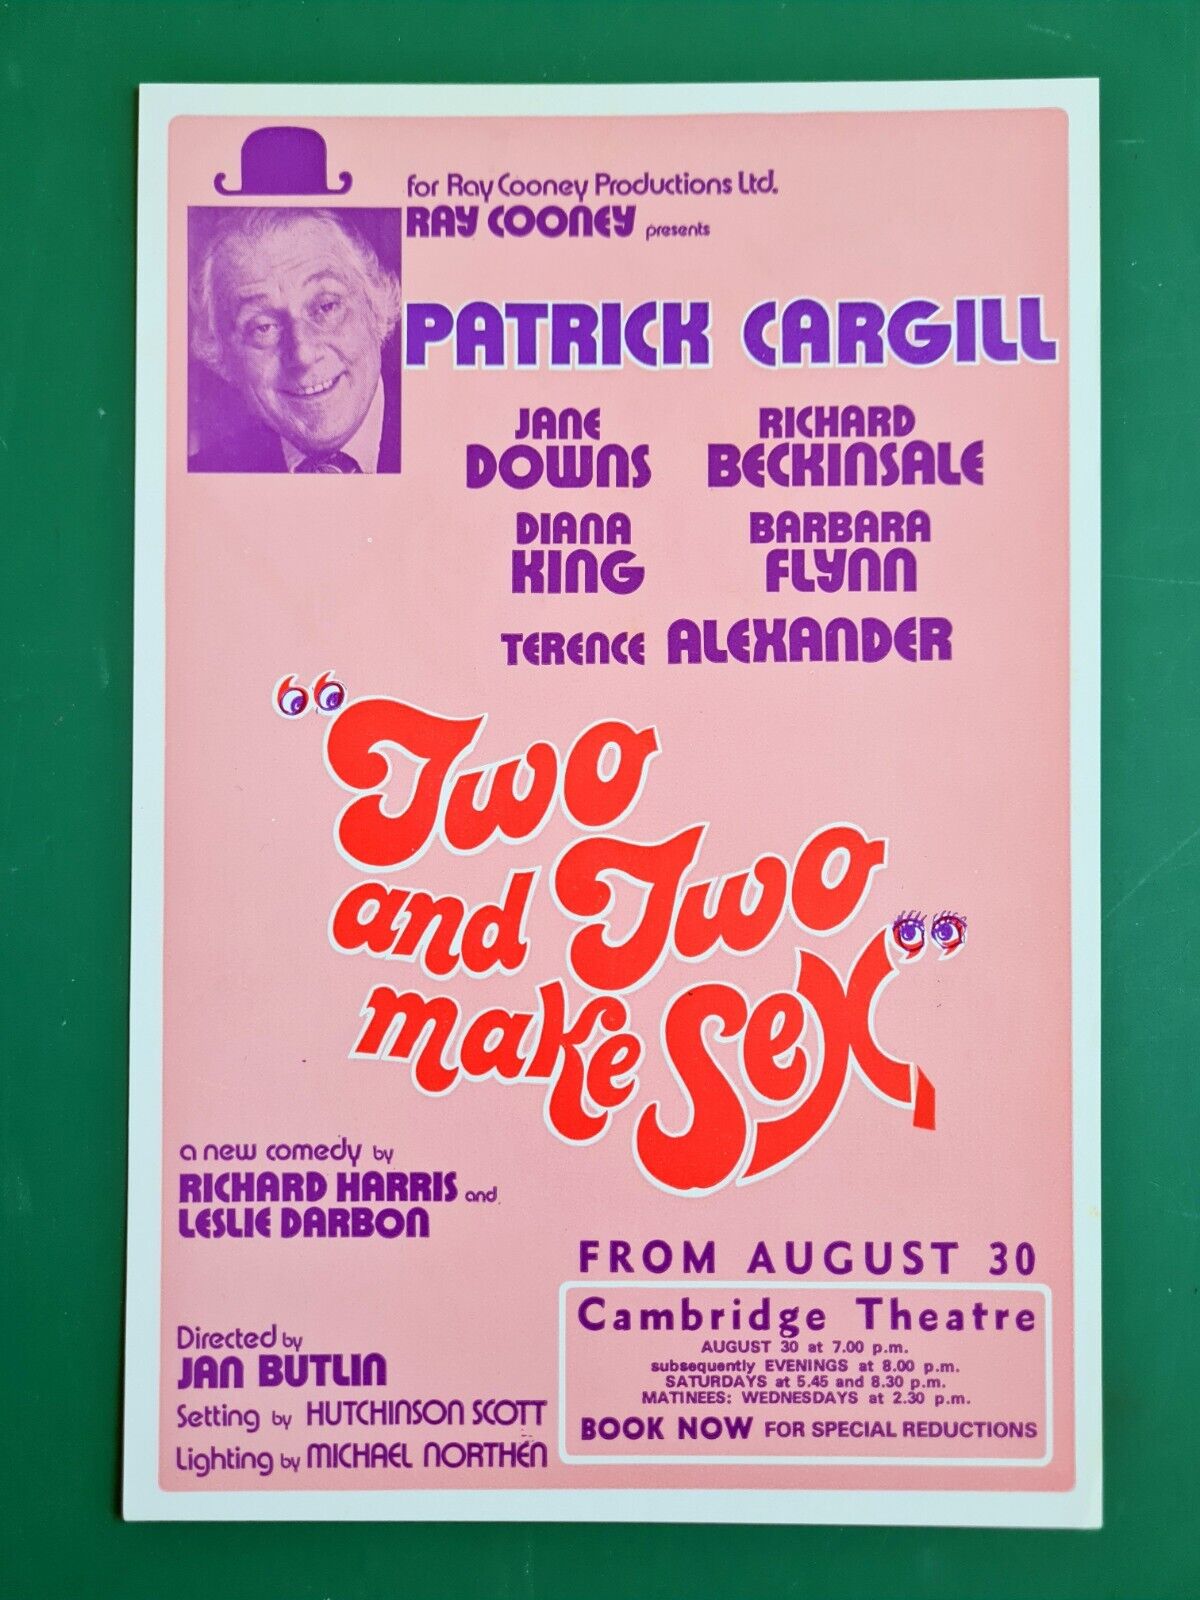 PATRICK CARGILL RICHARD BECKINSALE  JANE DOWNS Cambridge Theatre flyer 1973